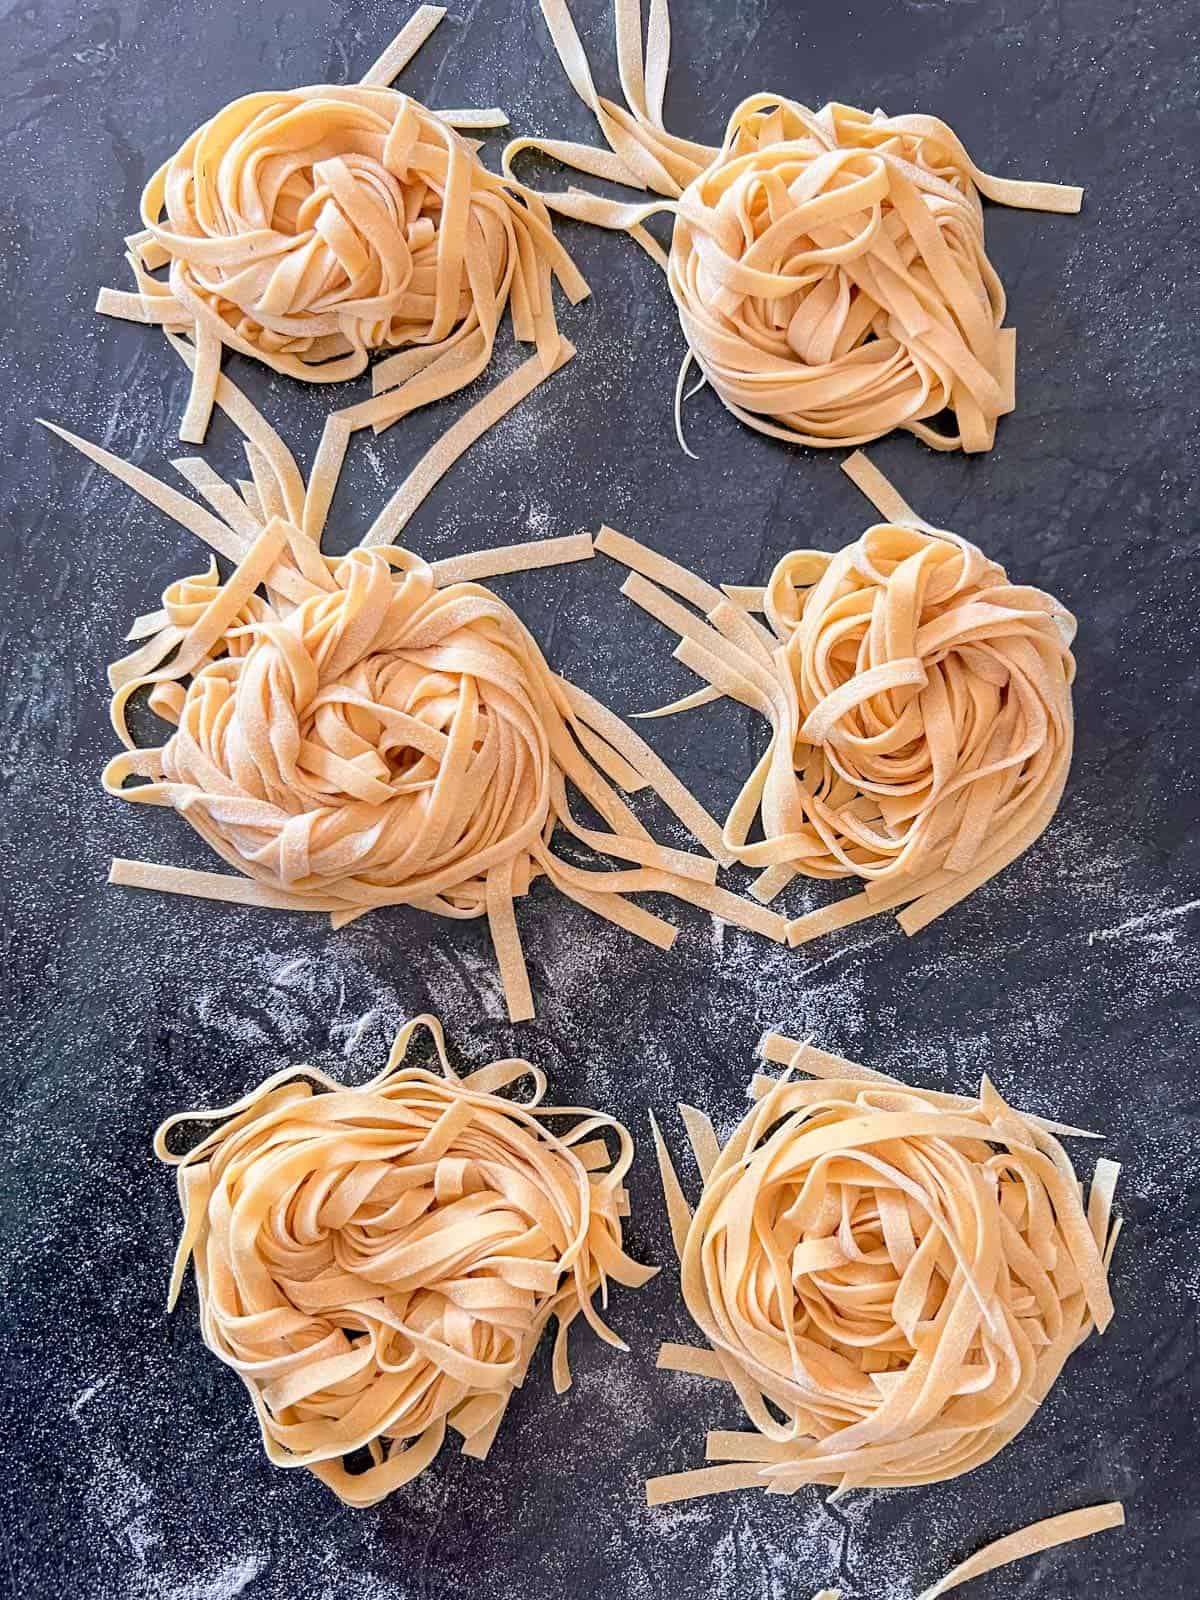 Homemade Pasta Recipe - So Easy!!! - Foodology Geek